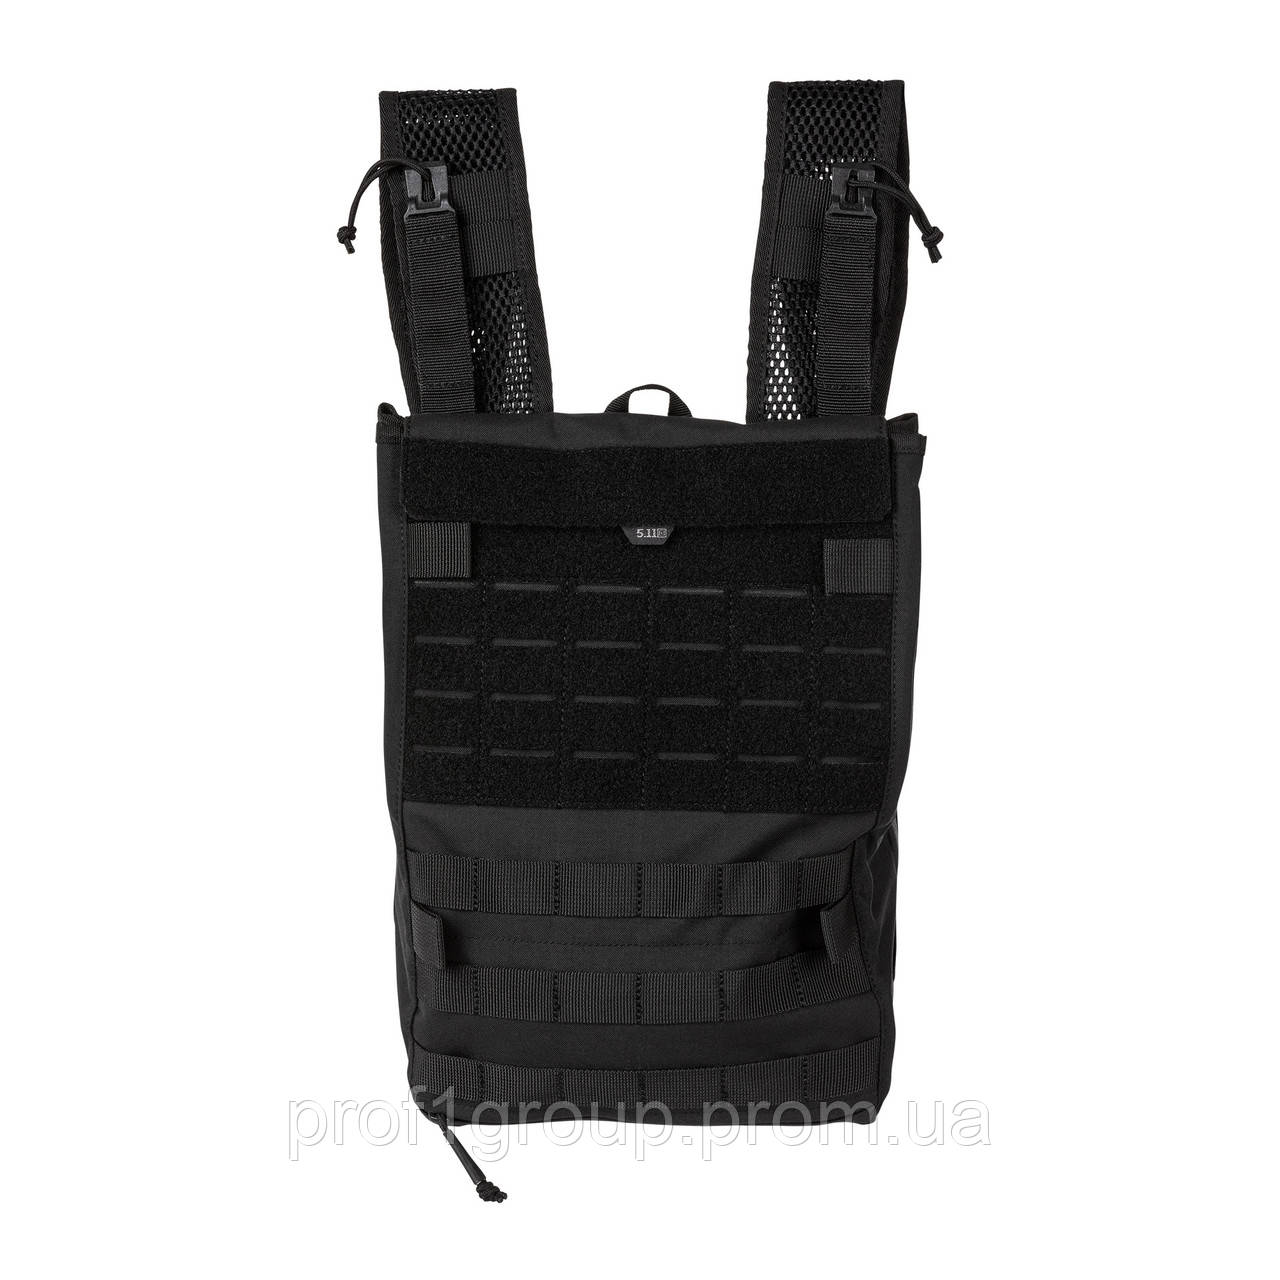 Рюкзак для питної системи 5.11 PC Convertible Hydration Carrier Black єдиний